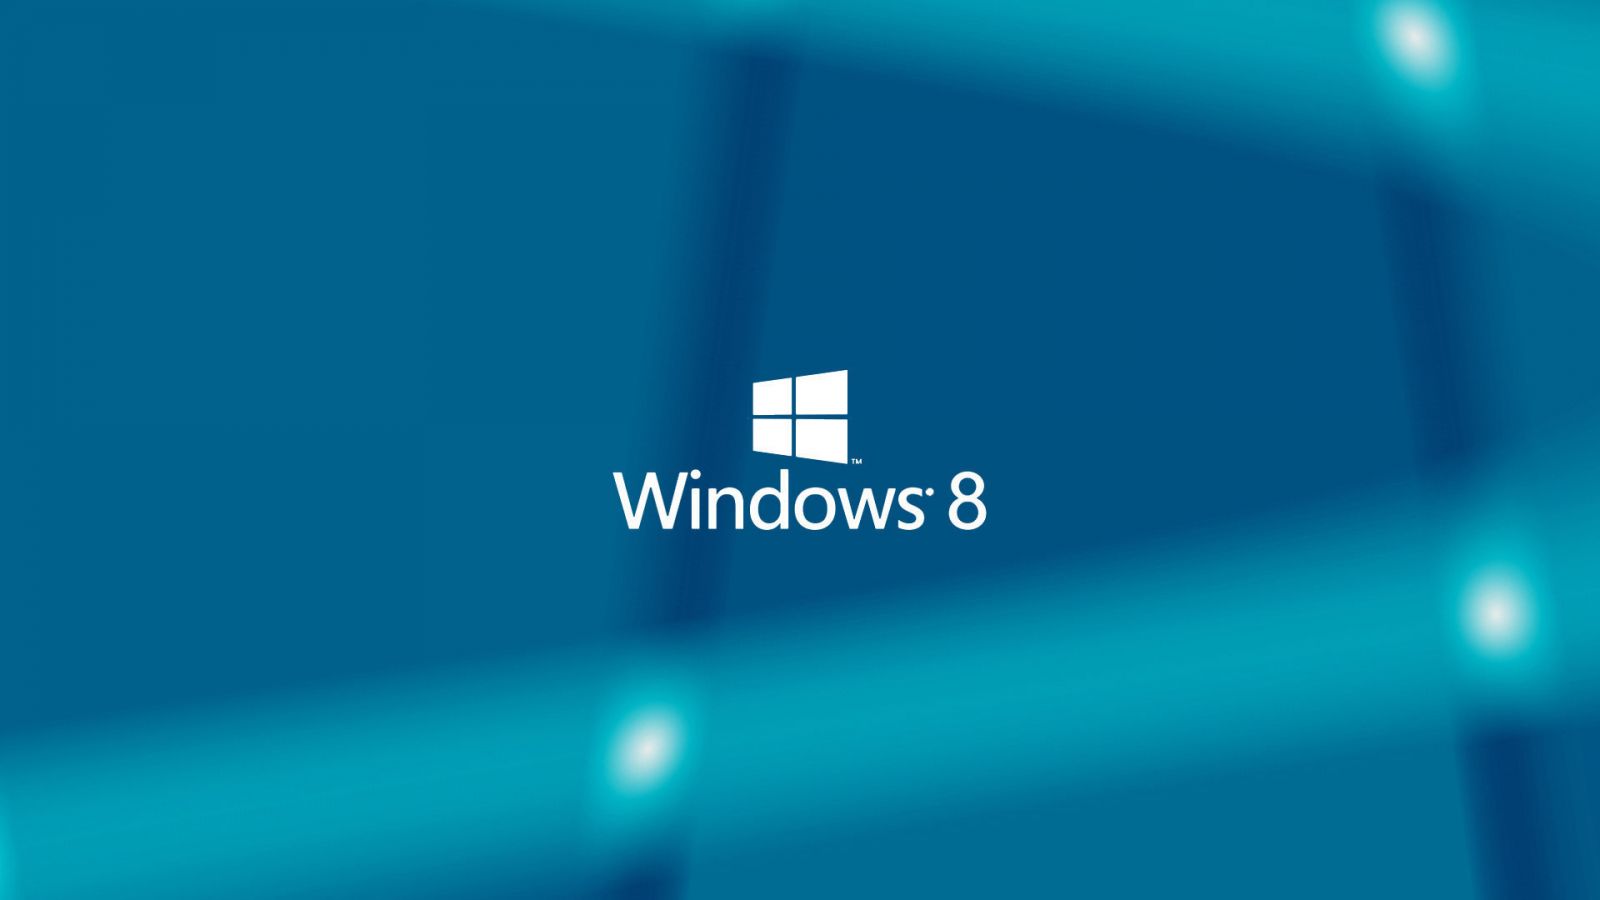 Download Windows 8 MSDN 15 August 2012